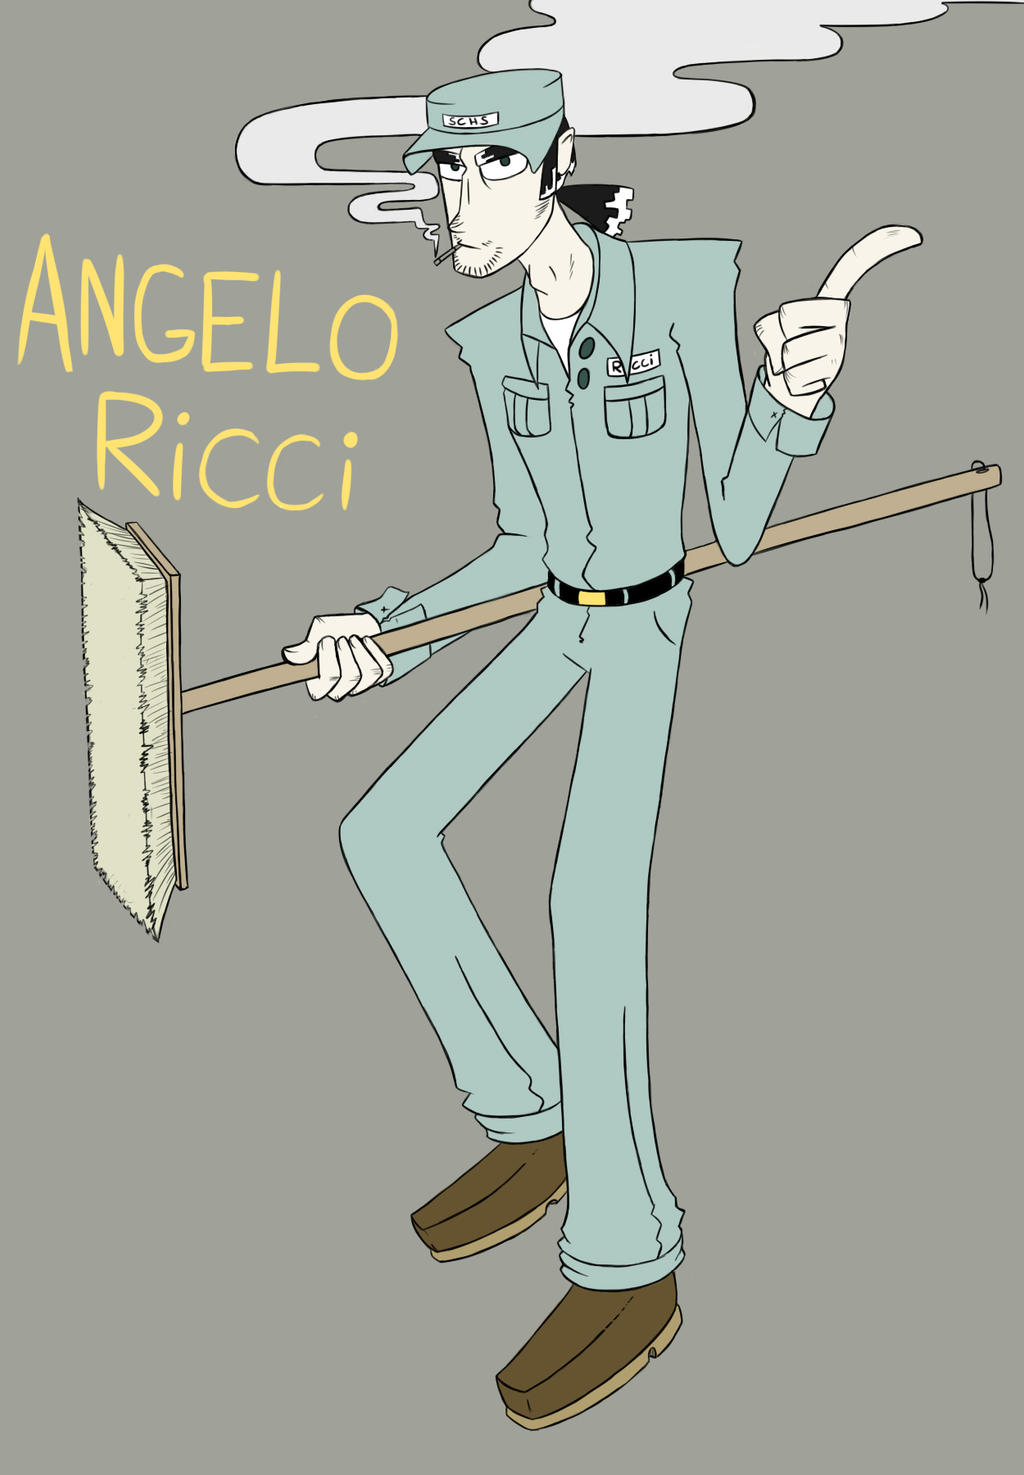  - angelo_ricci_by_demon_gut-d5wgpef